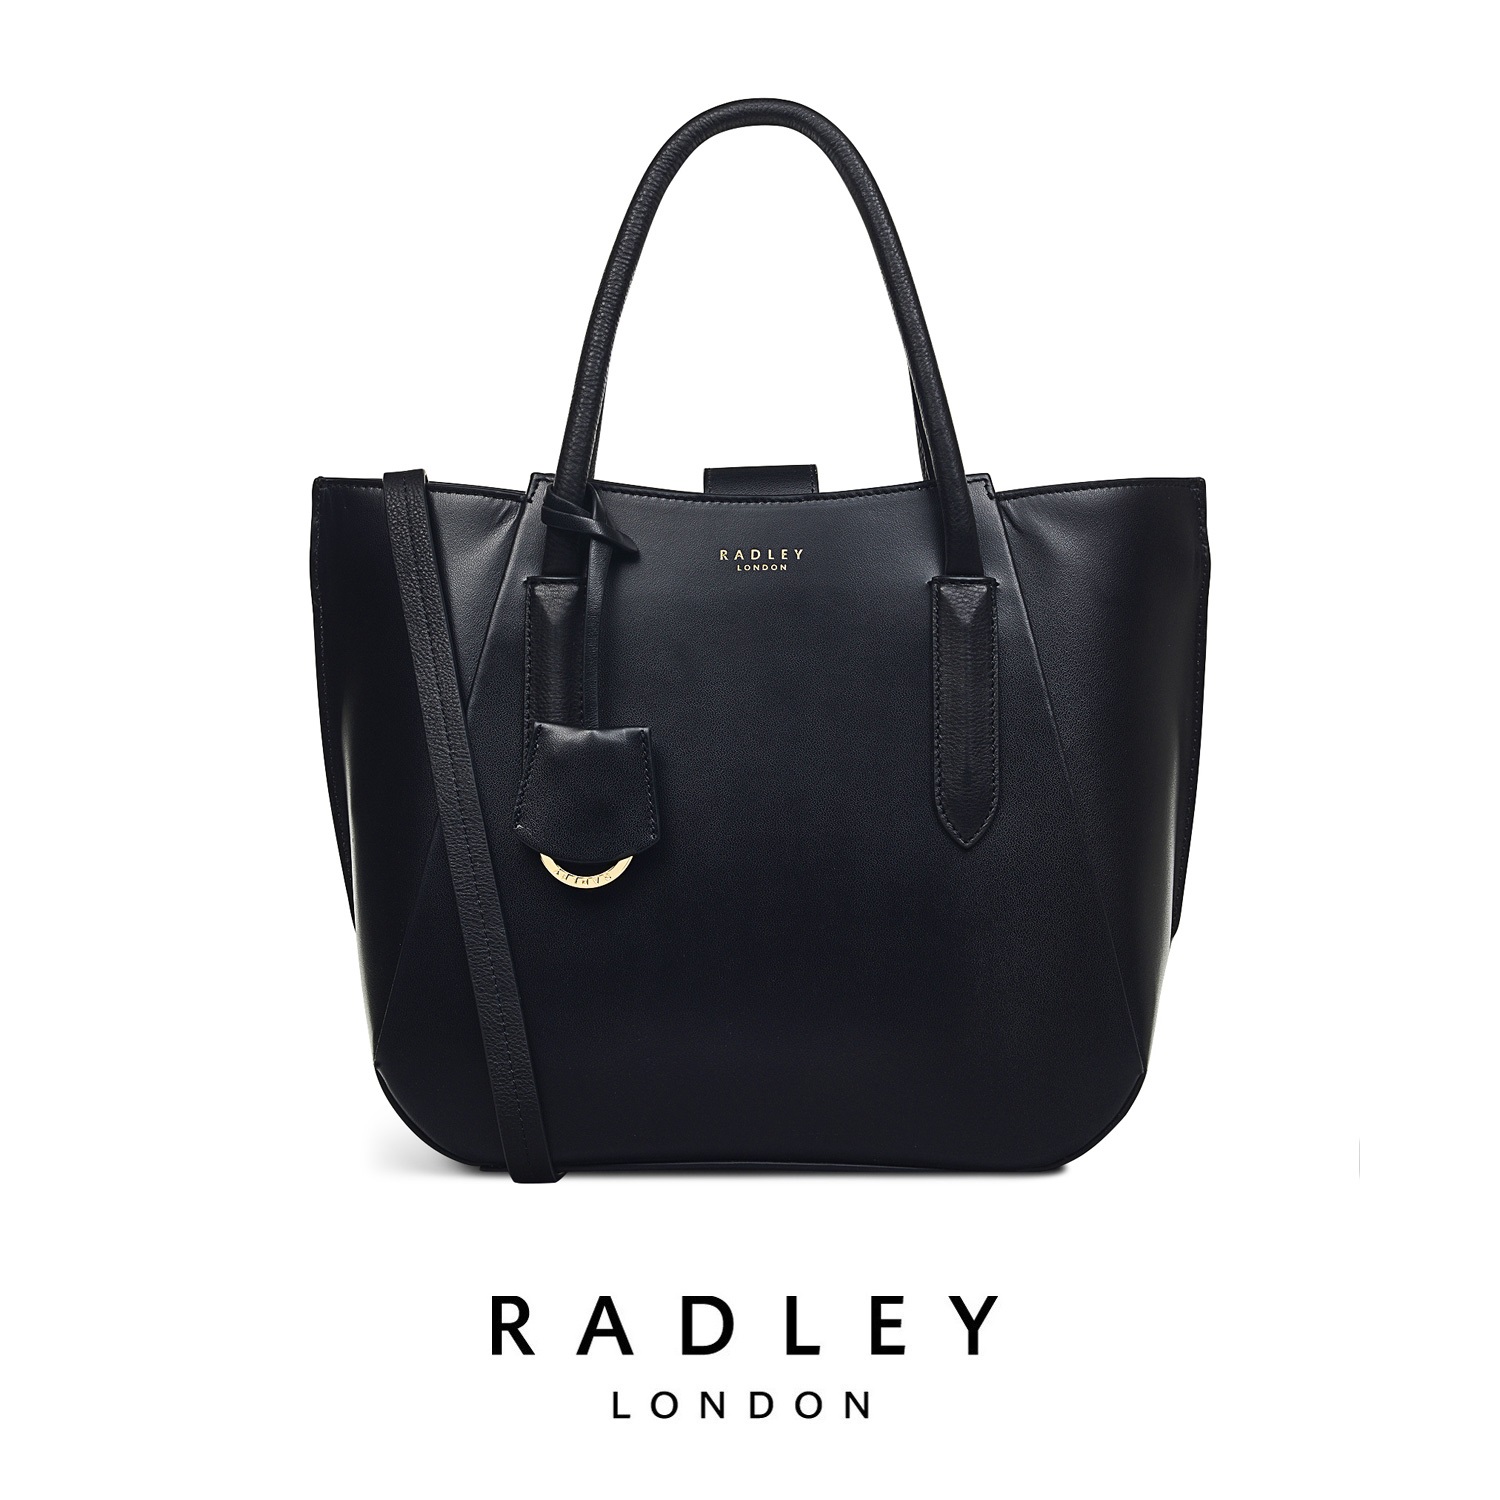 Radley London Bag